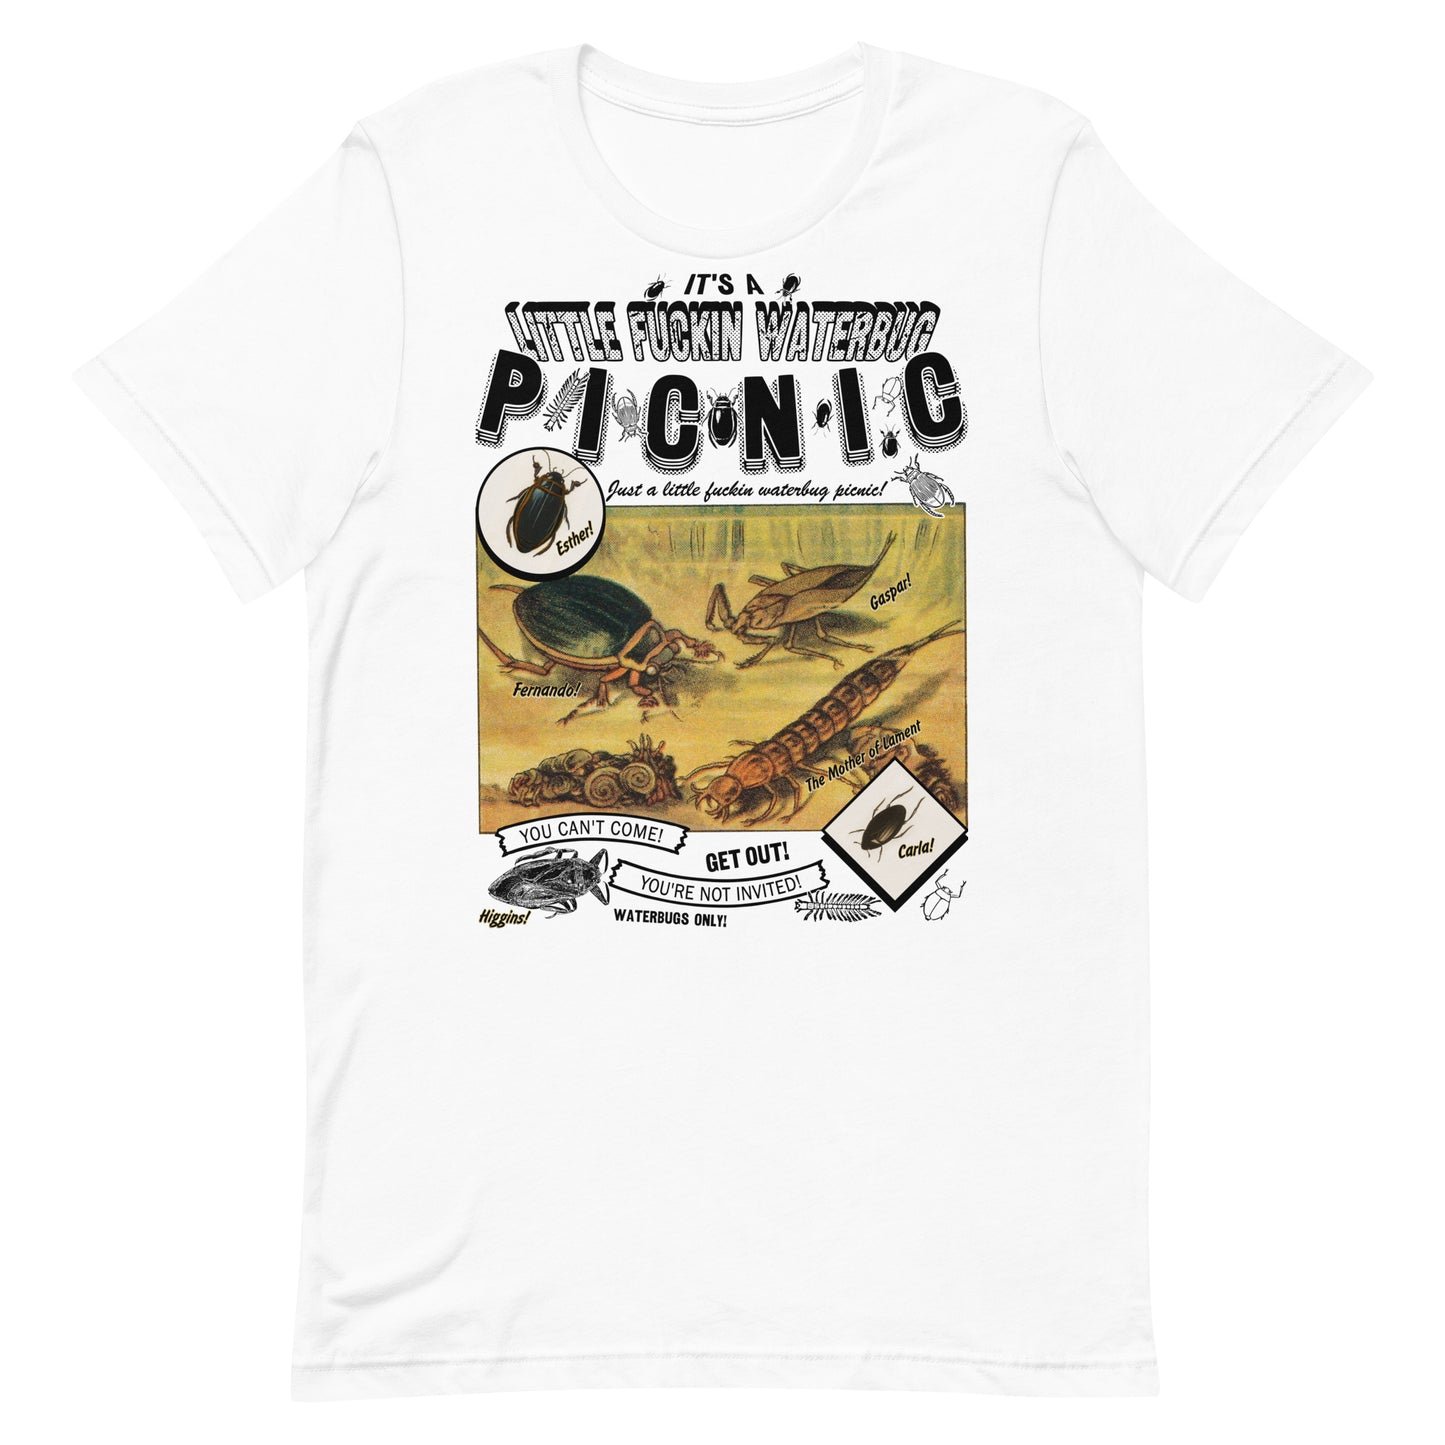 "Waterbug Picnic" Unisex t-shirt